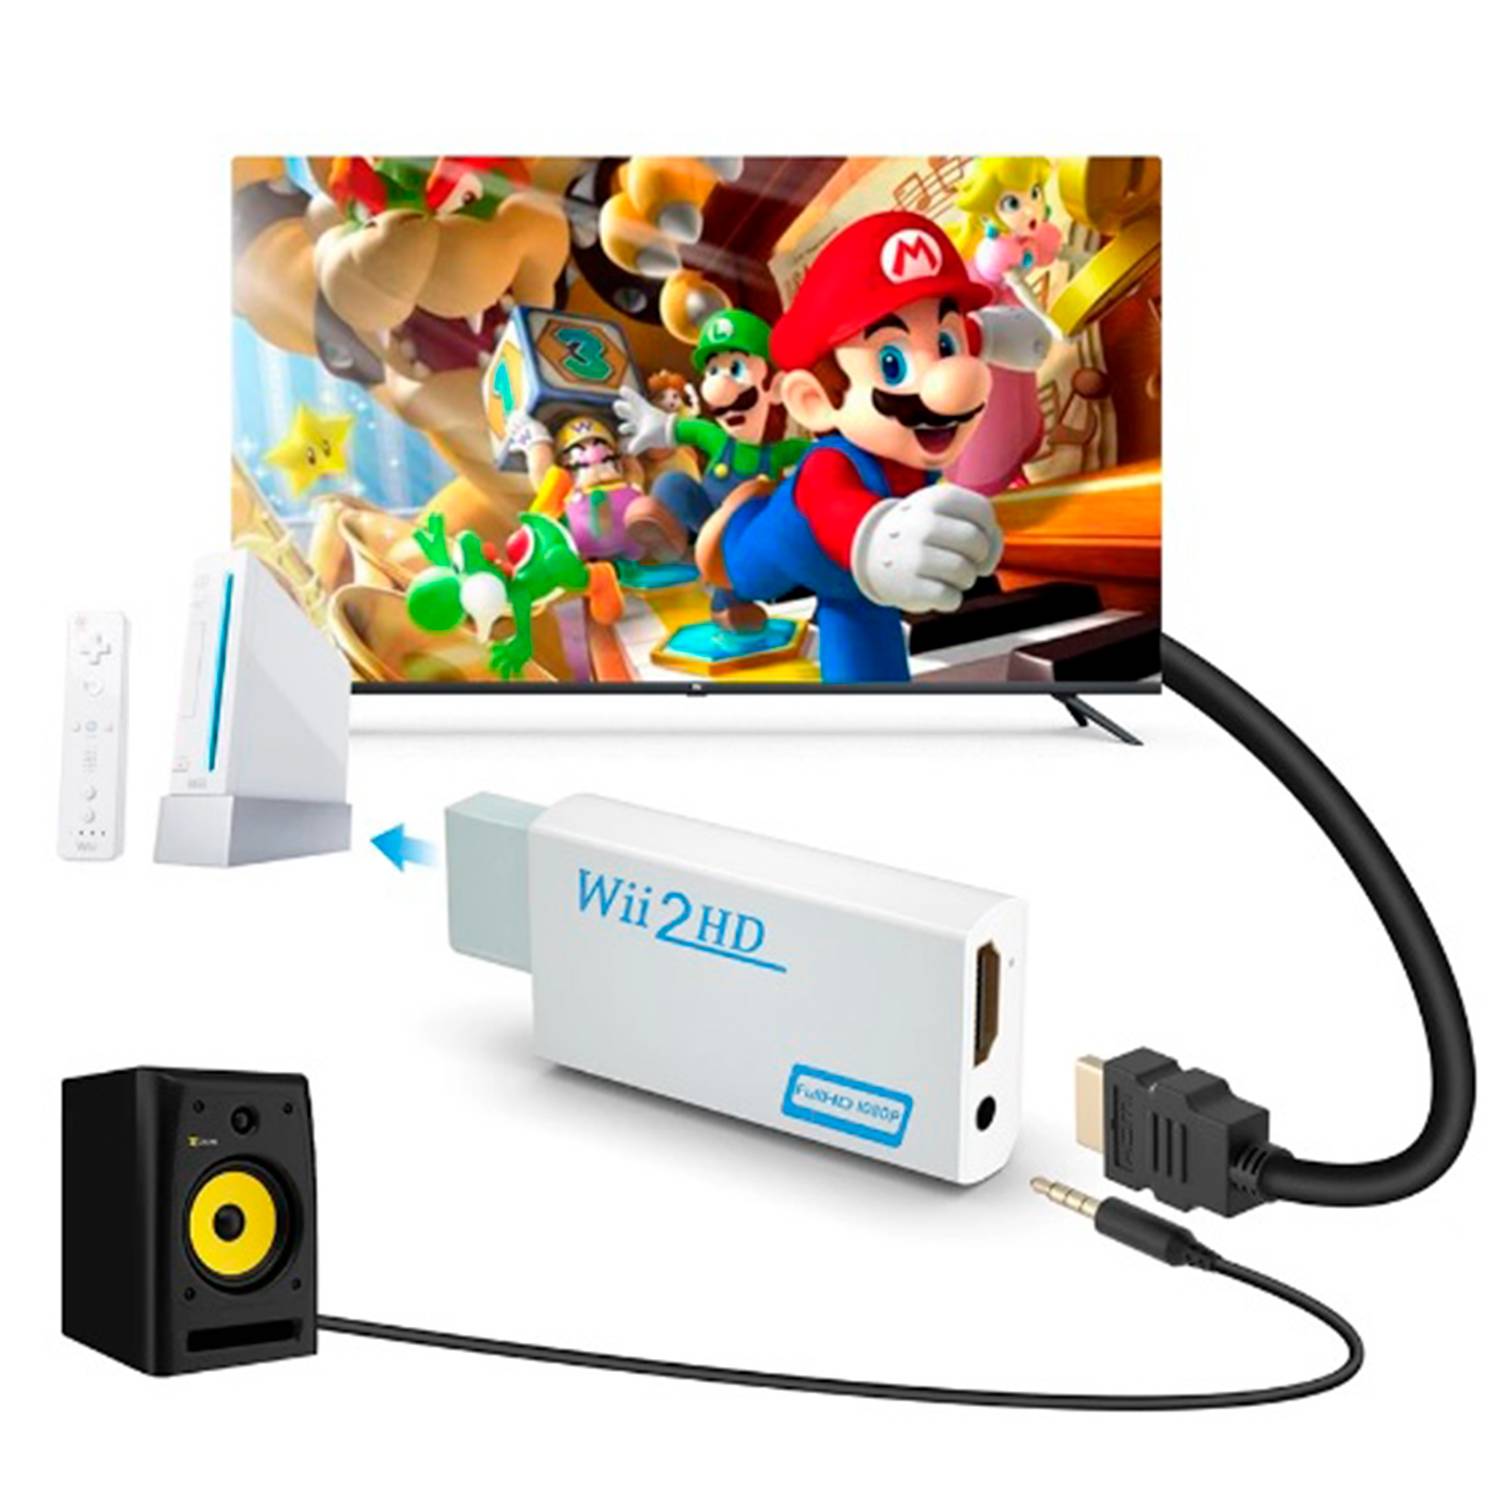 Wii hdmi convertidor adaptador wii a hdmi audio hdmi 1080p GENERICO